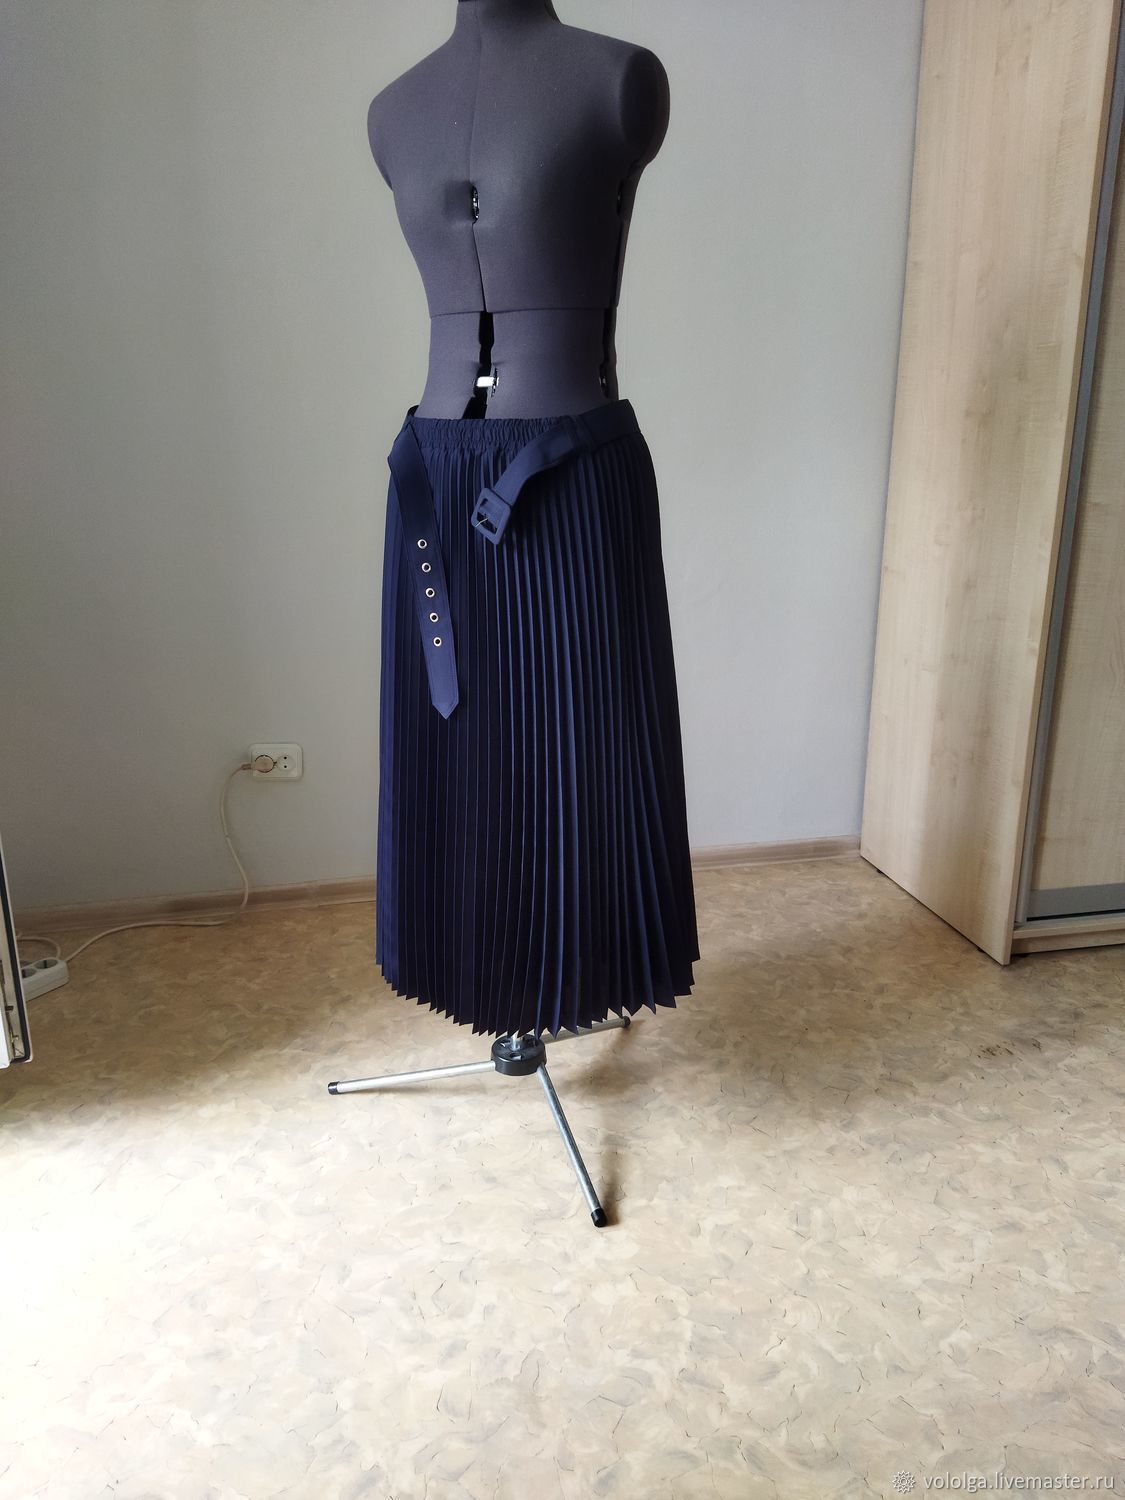 Трикотажная юбка с резинкой на поясе